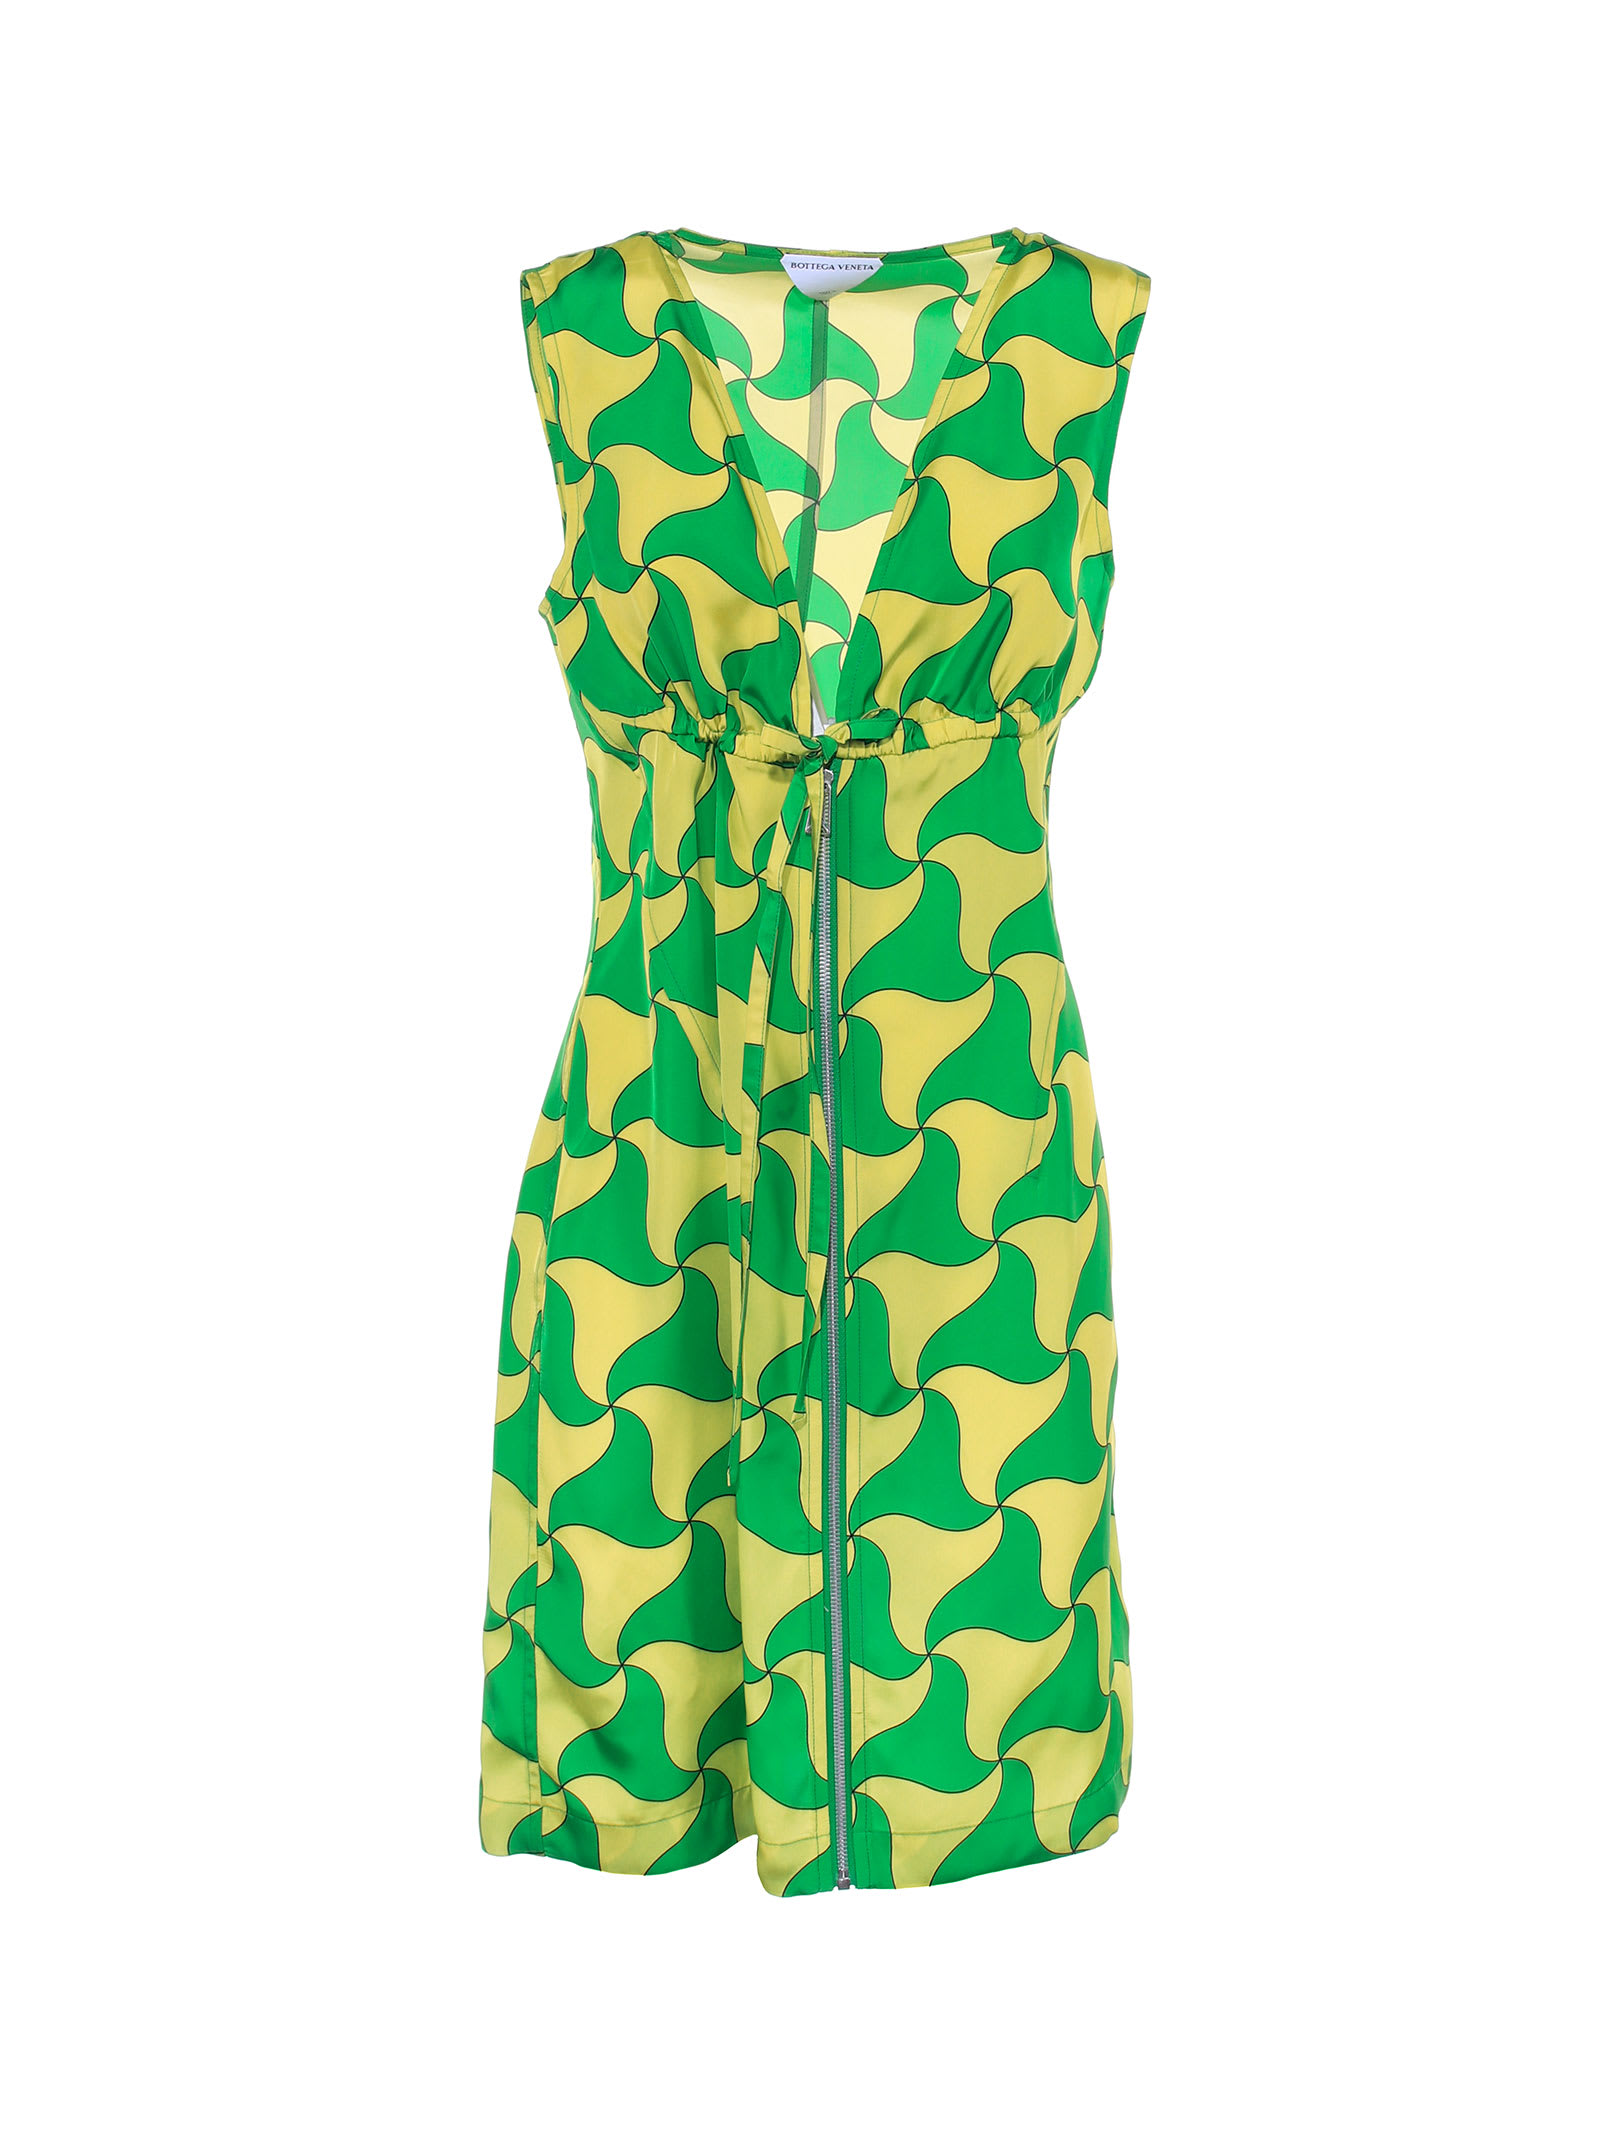 Bottega Veneta Wavy Triangle Print Dress